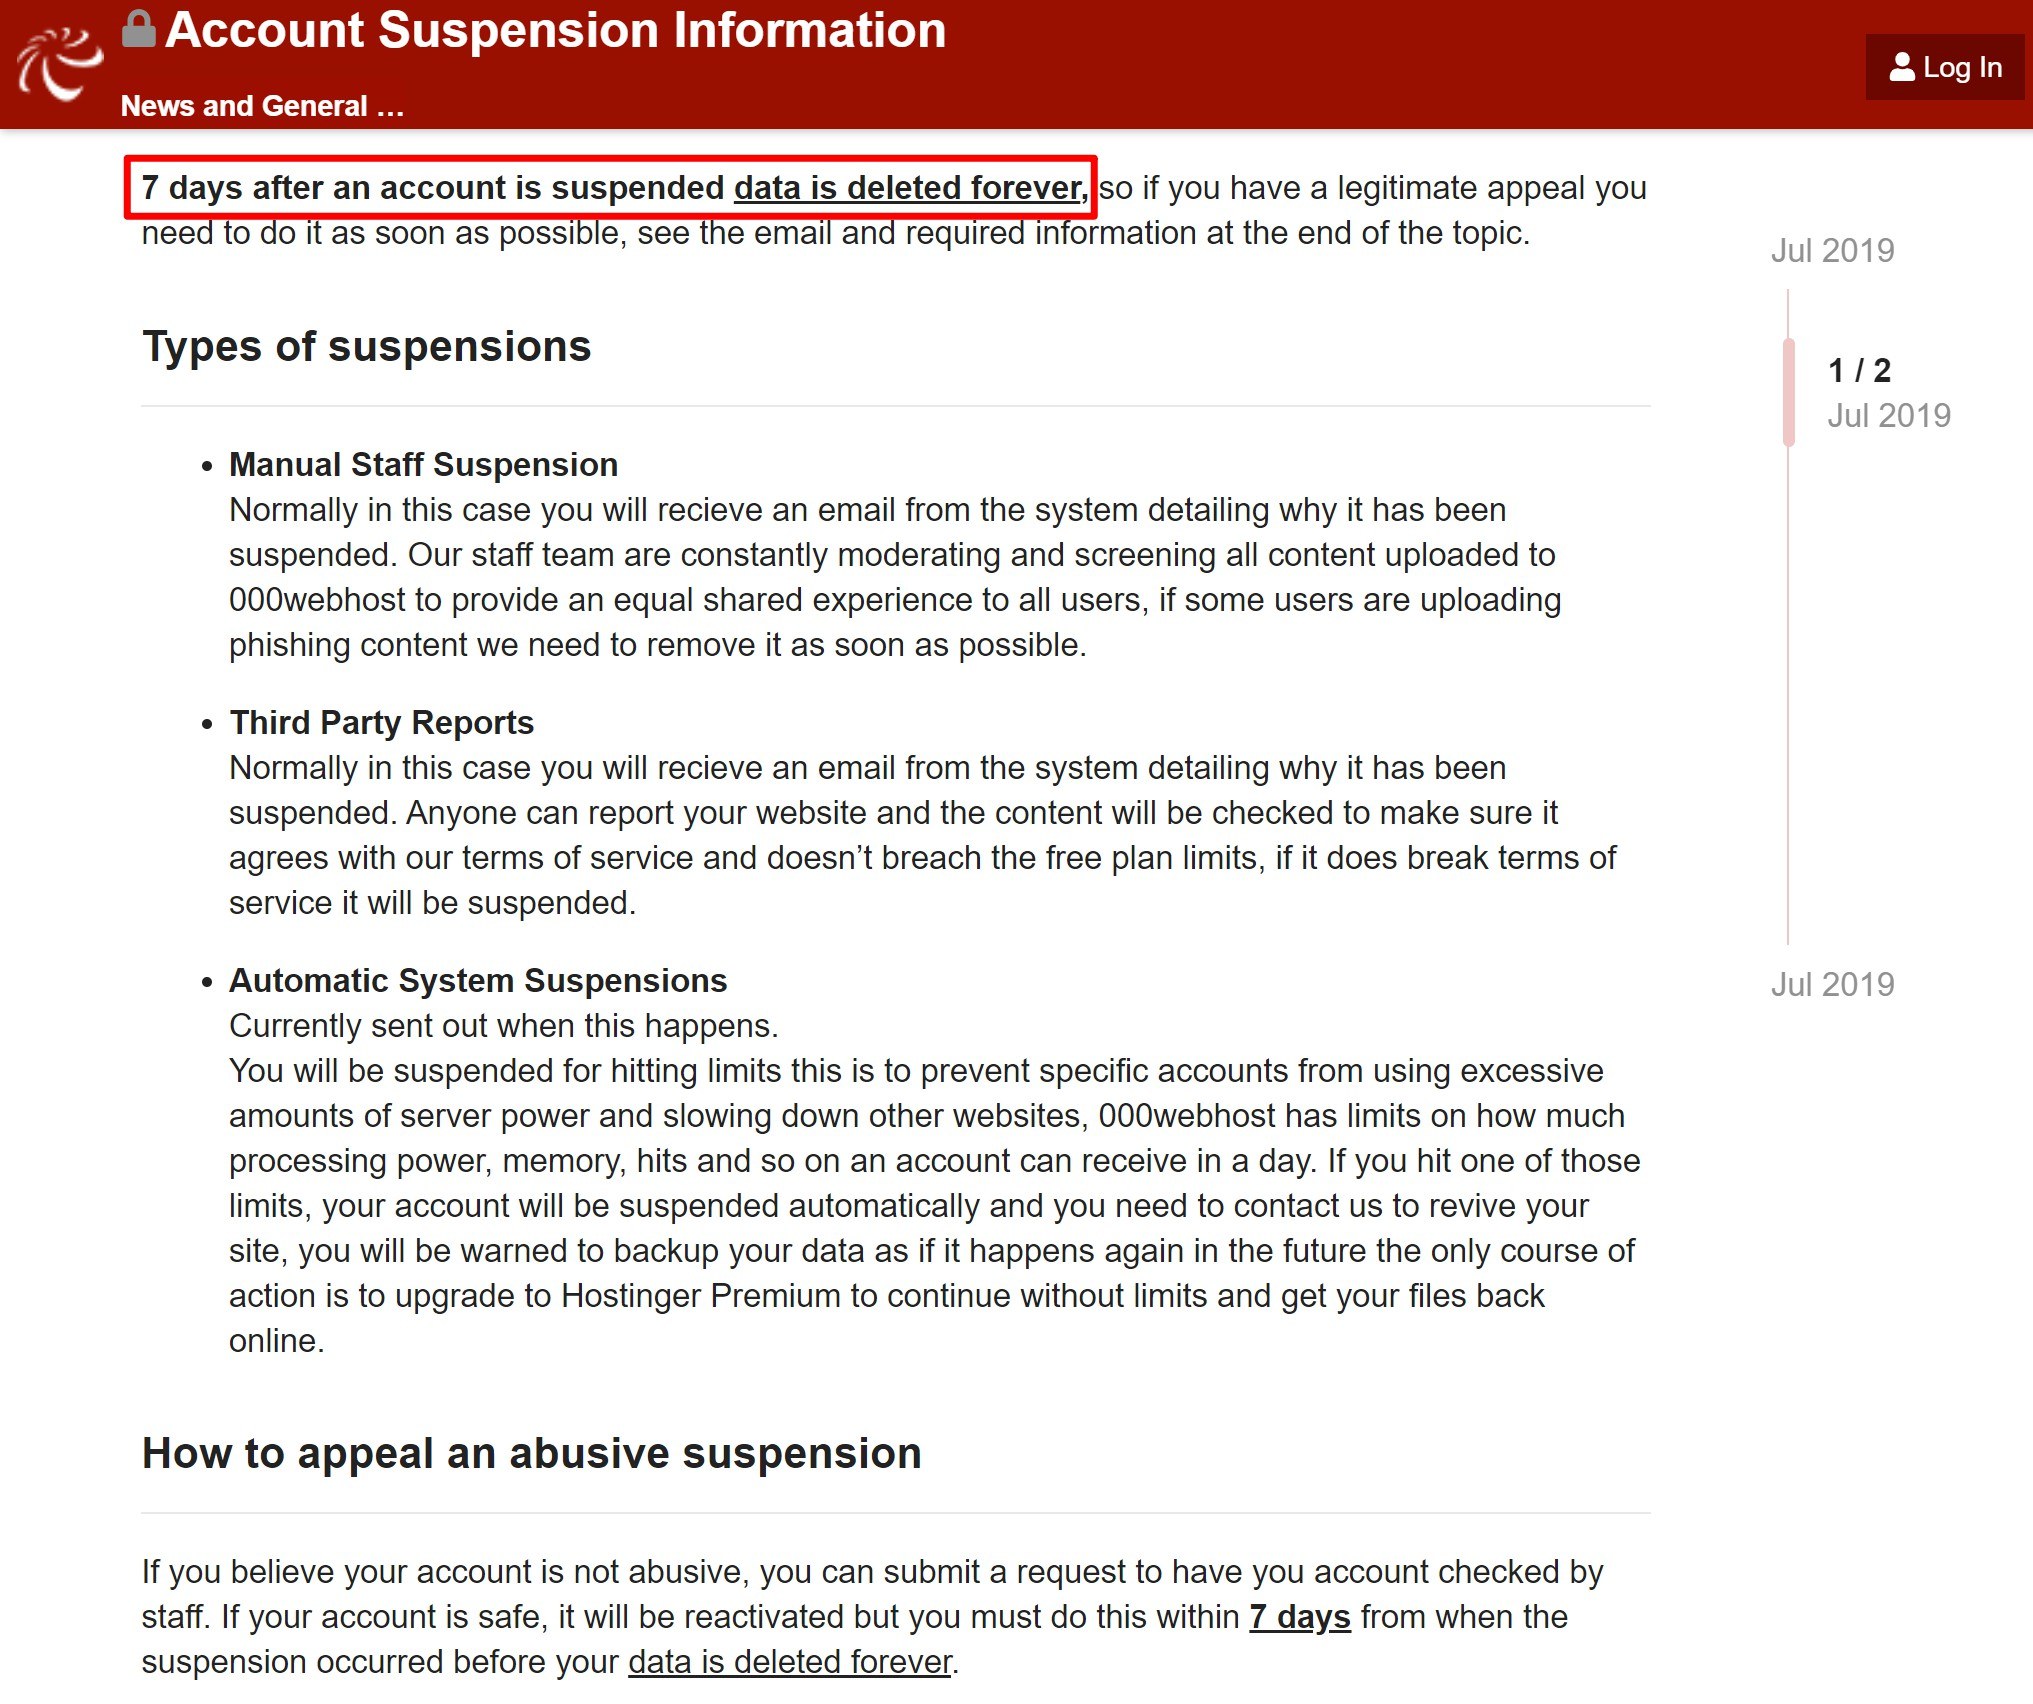 000webhost account suspension policies